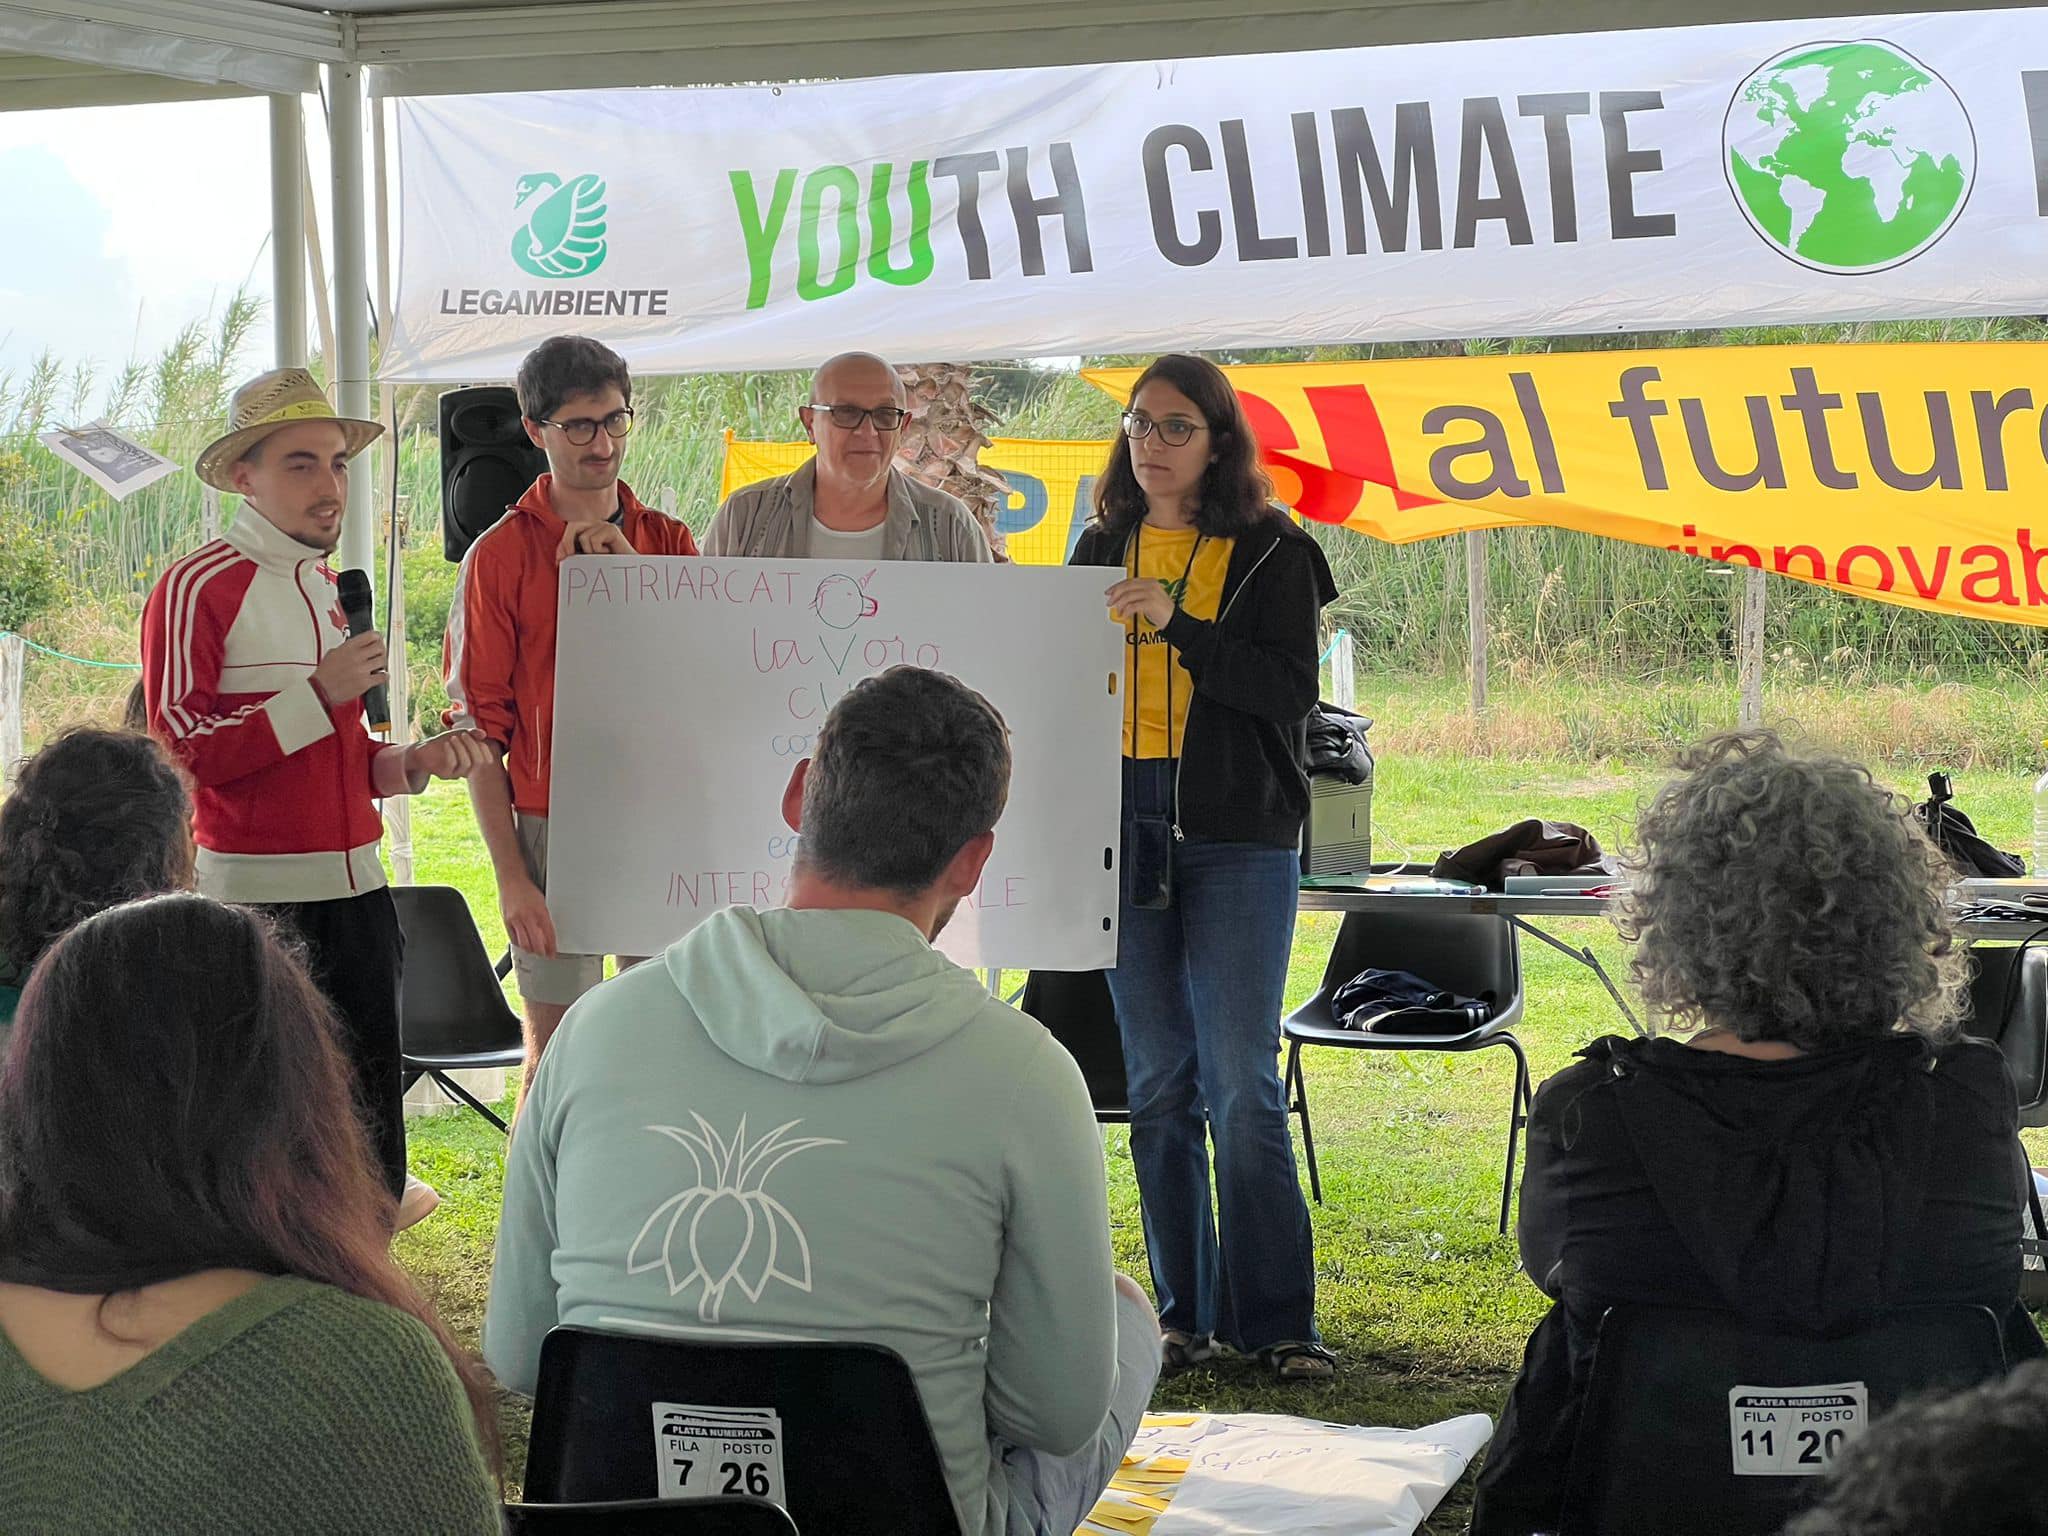 Pontecagnano Faiano: Legambiente “Youth Climate Meeting Campania”